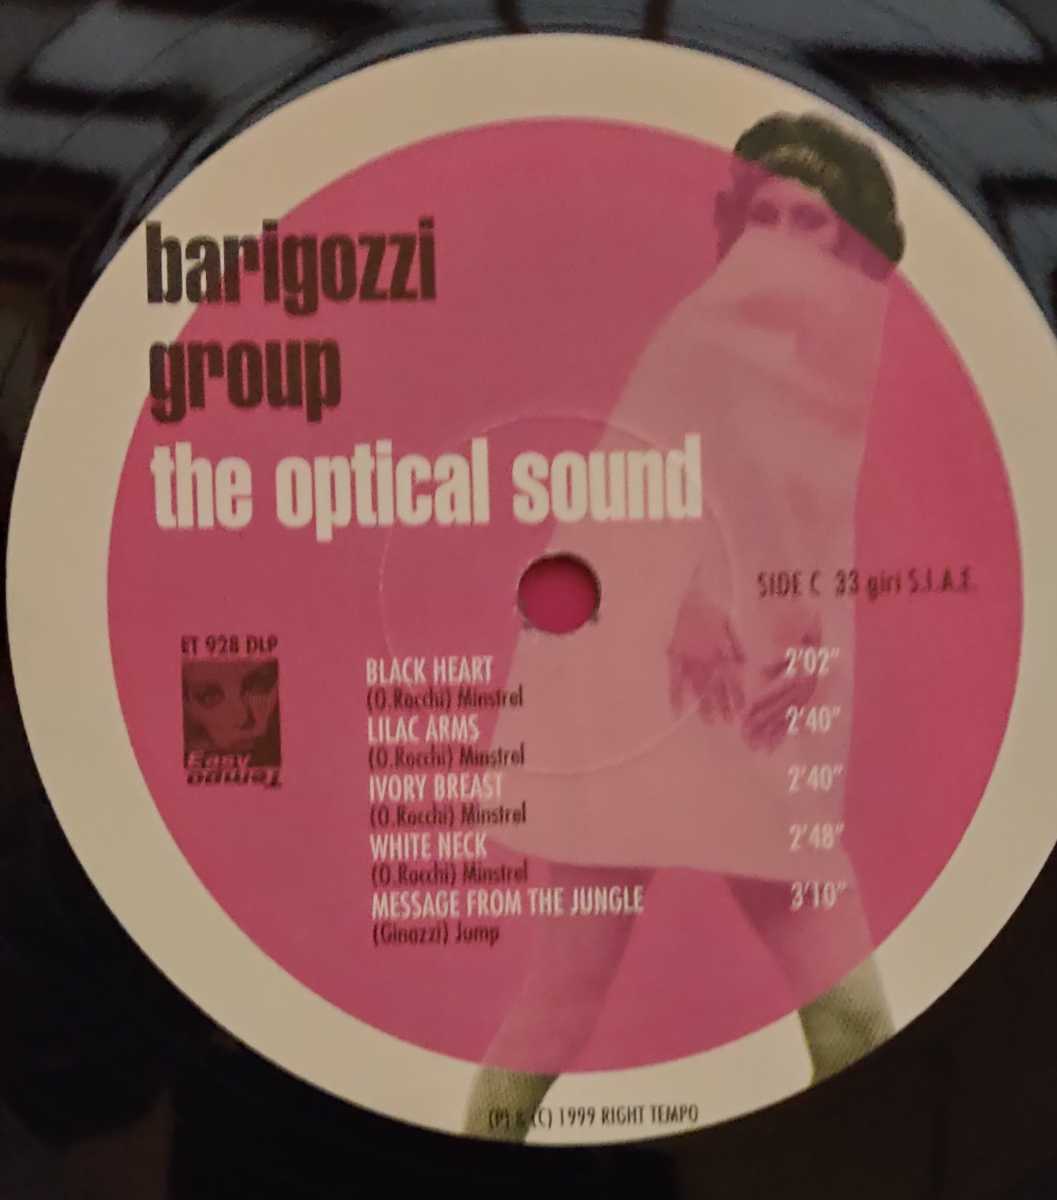 Jazz Bossa jazz funk 2枚組 Bargozzi group the optical sound レコードの画像4